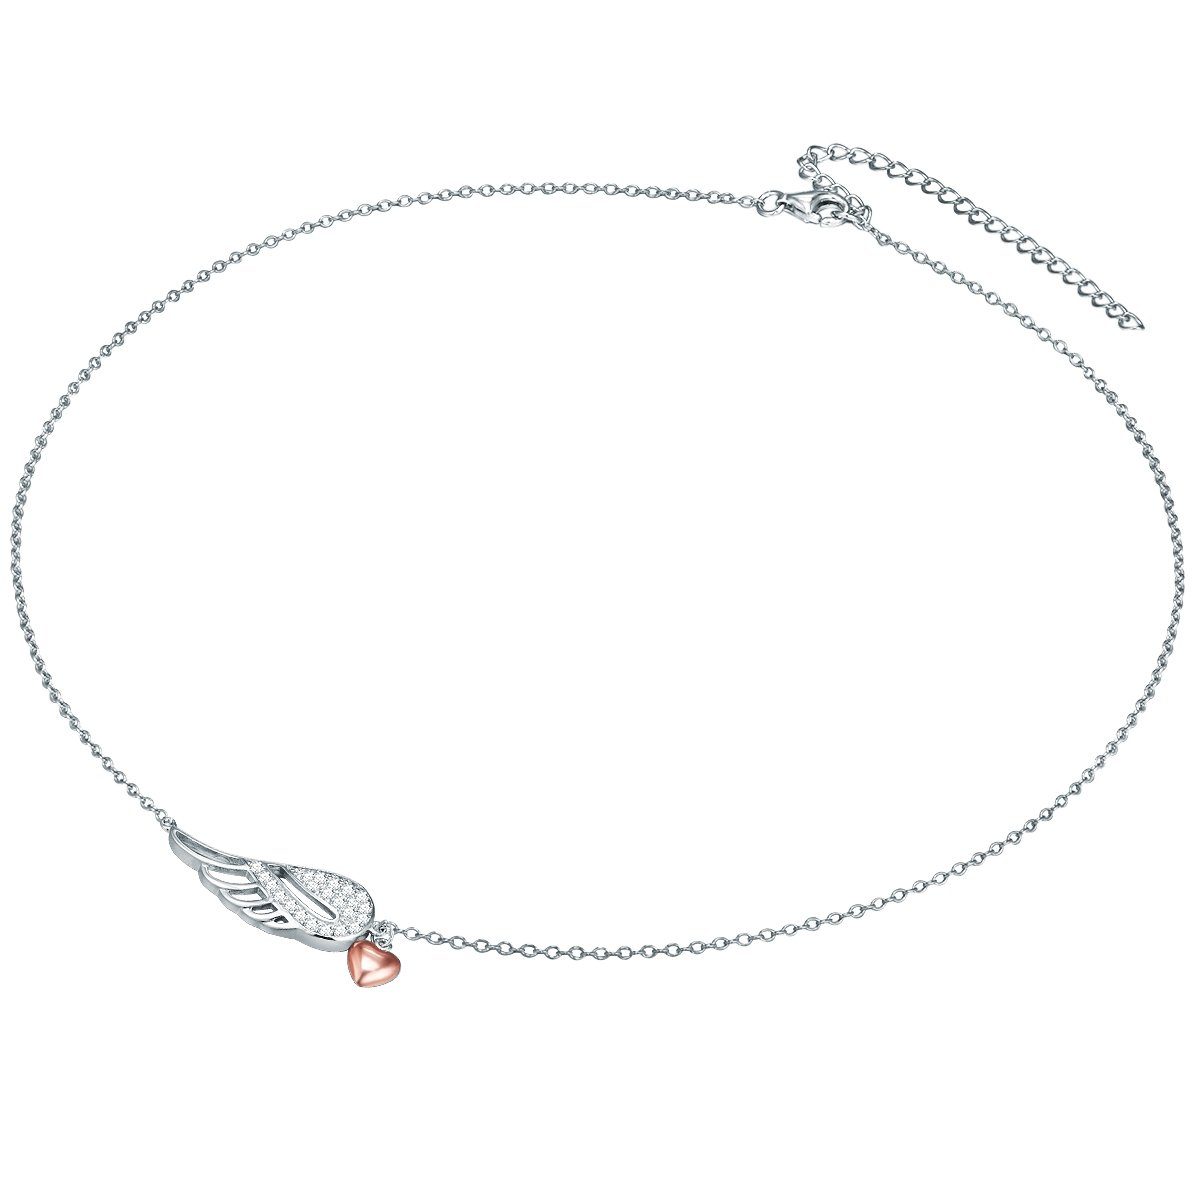 Rafaela Donata Silberkette Zirkonia silber/roségold, mit Herz/Flügel